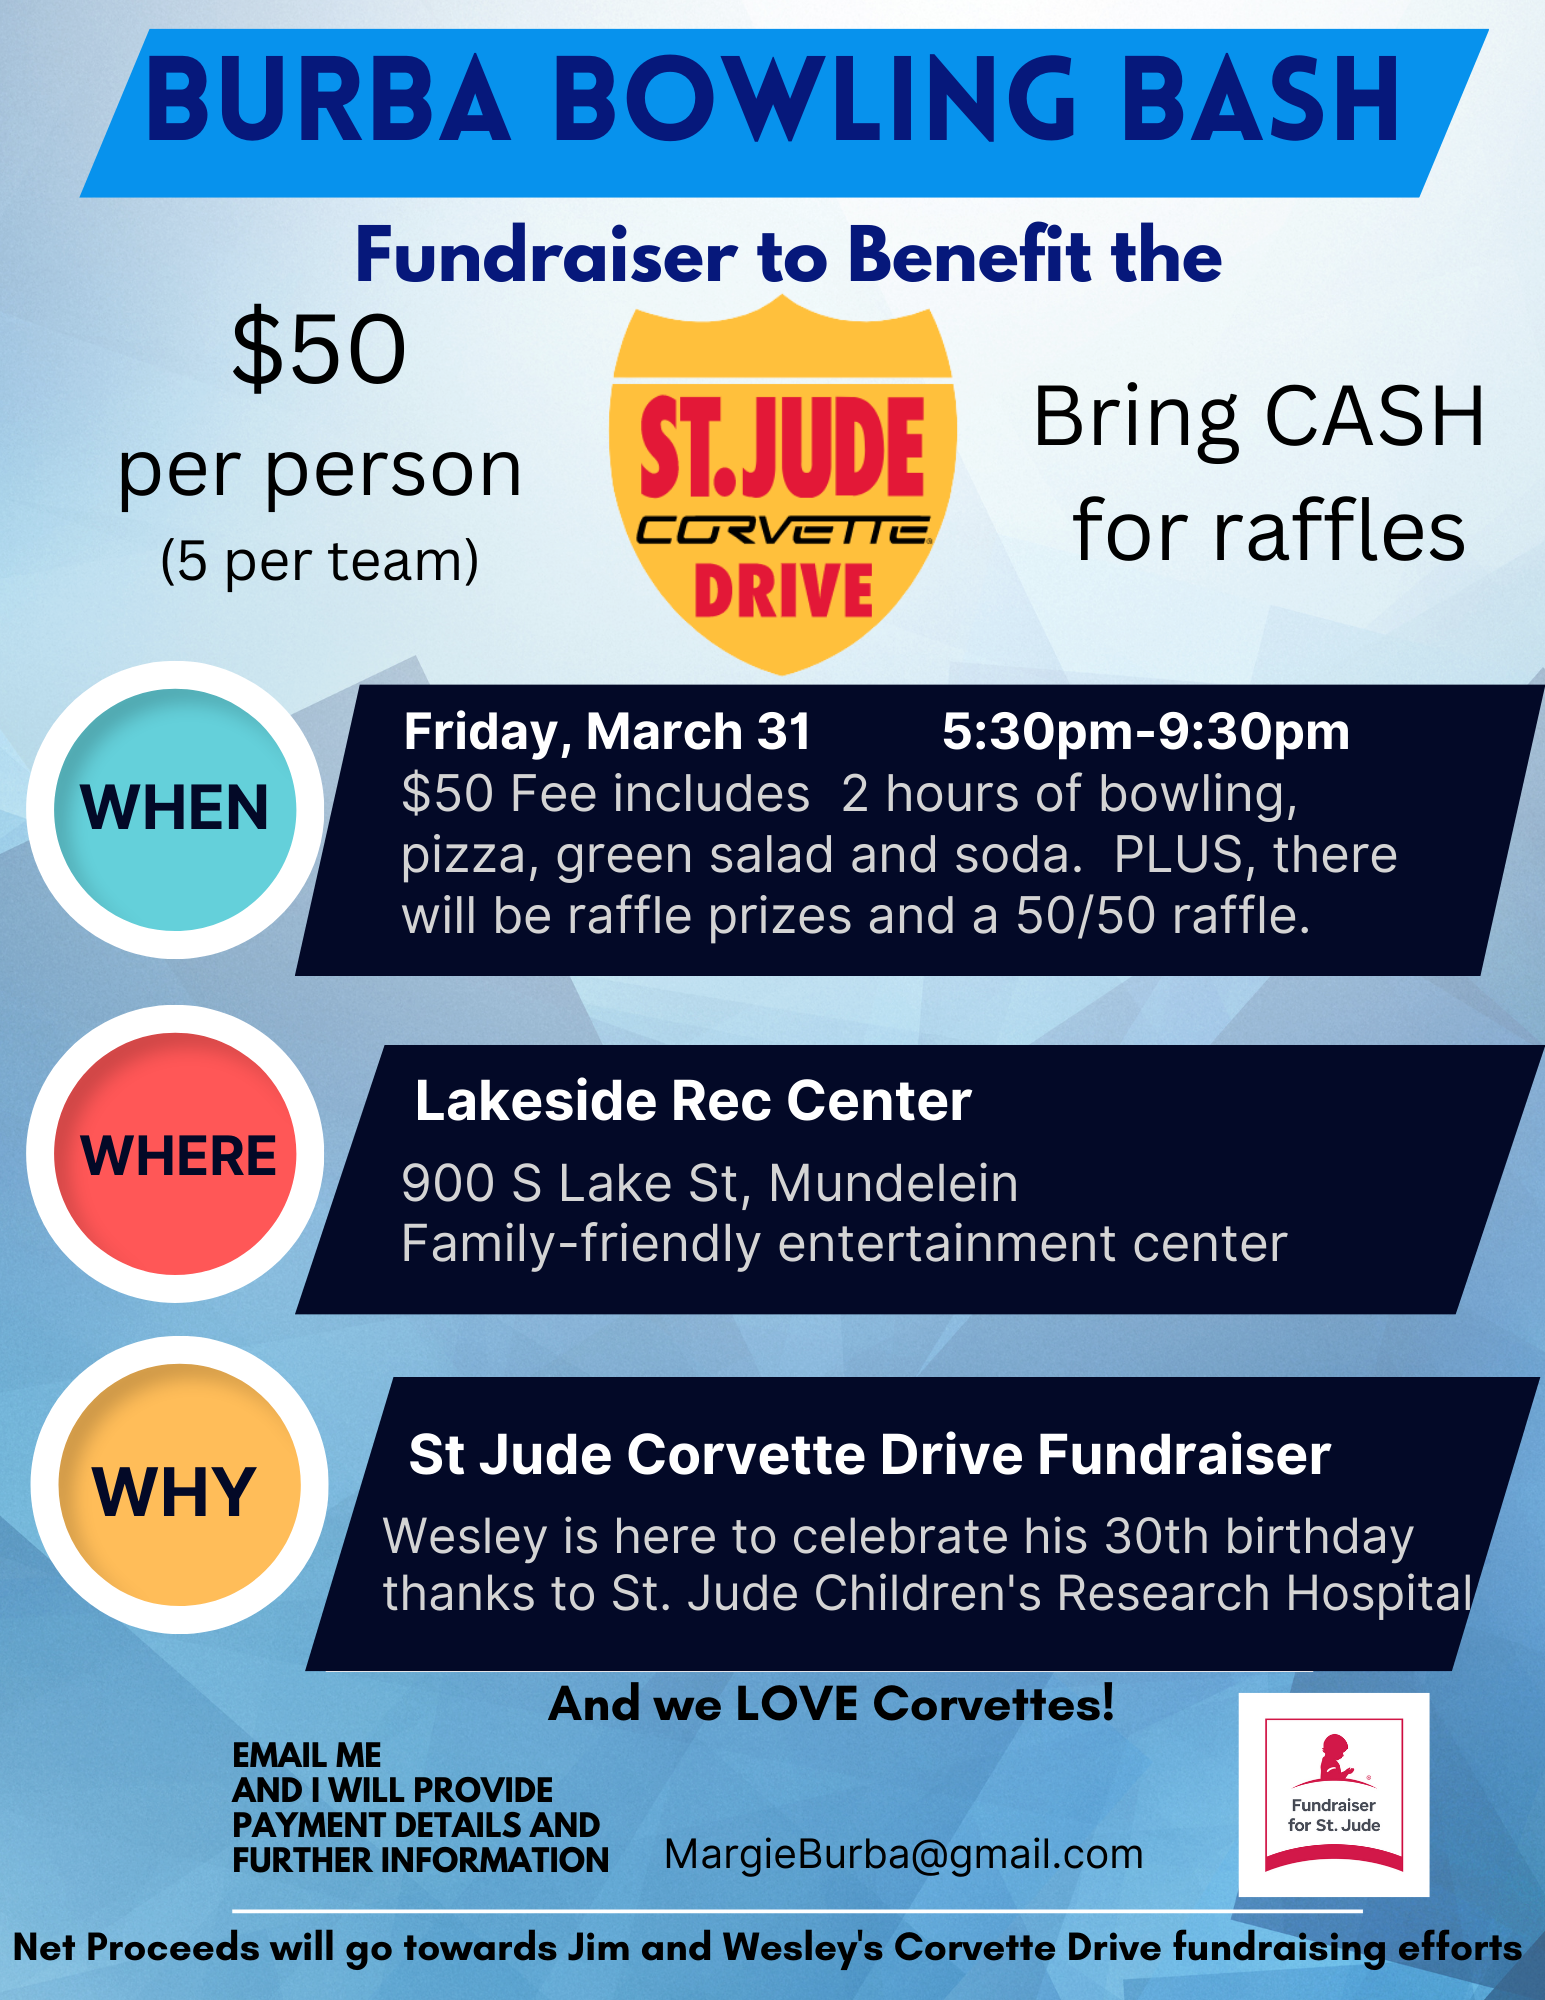 Burba Bowling Bash Fundraiser to Benefit the St Jude Corvette Drive Fundraiser